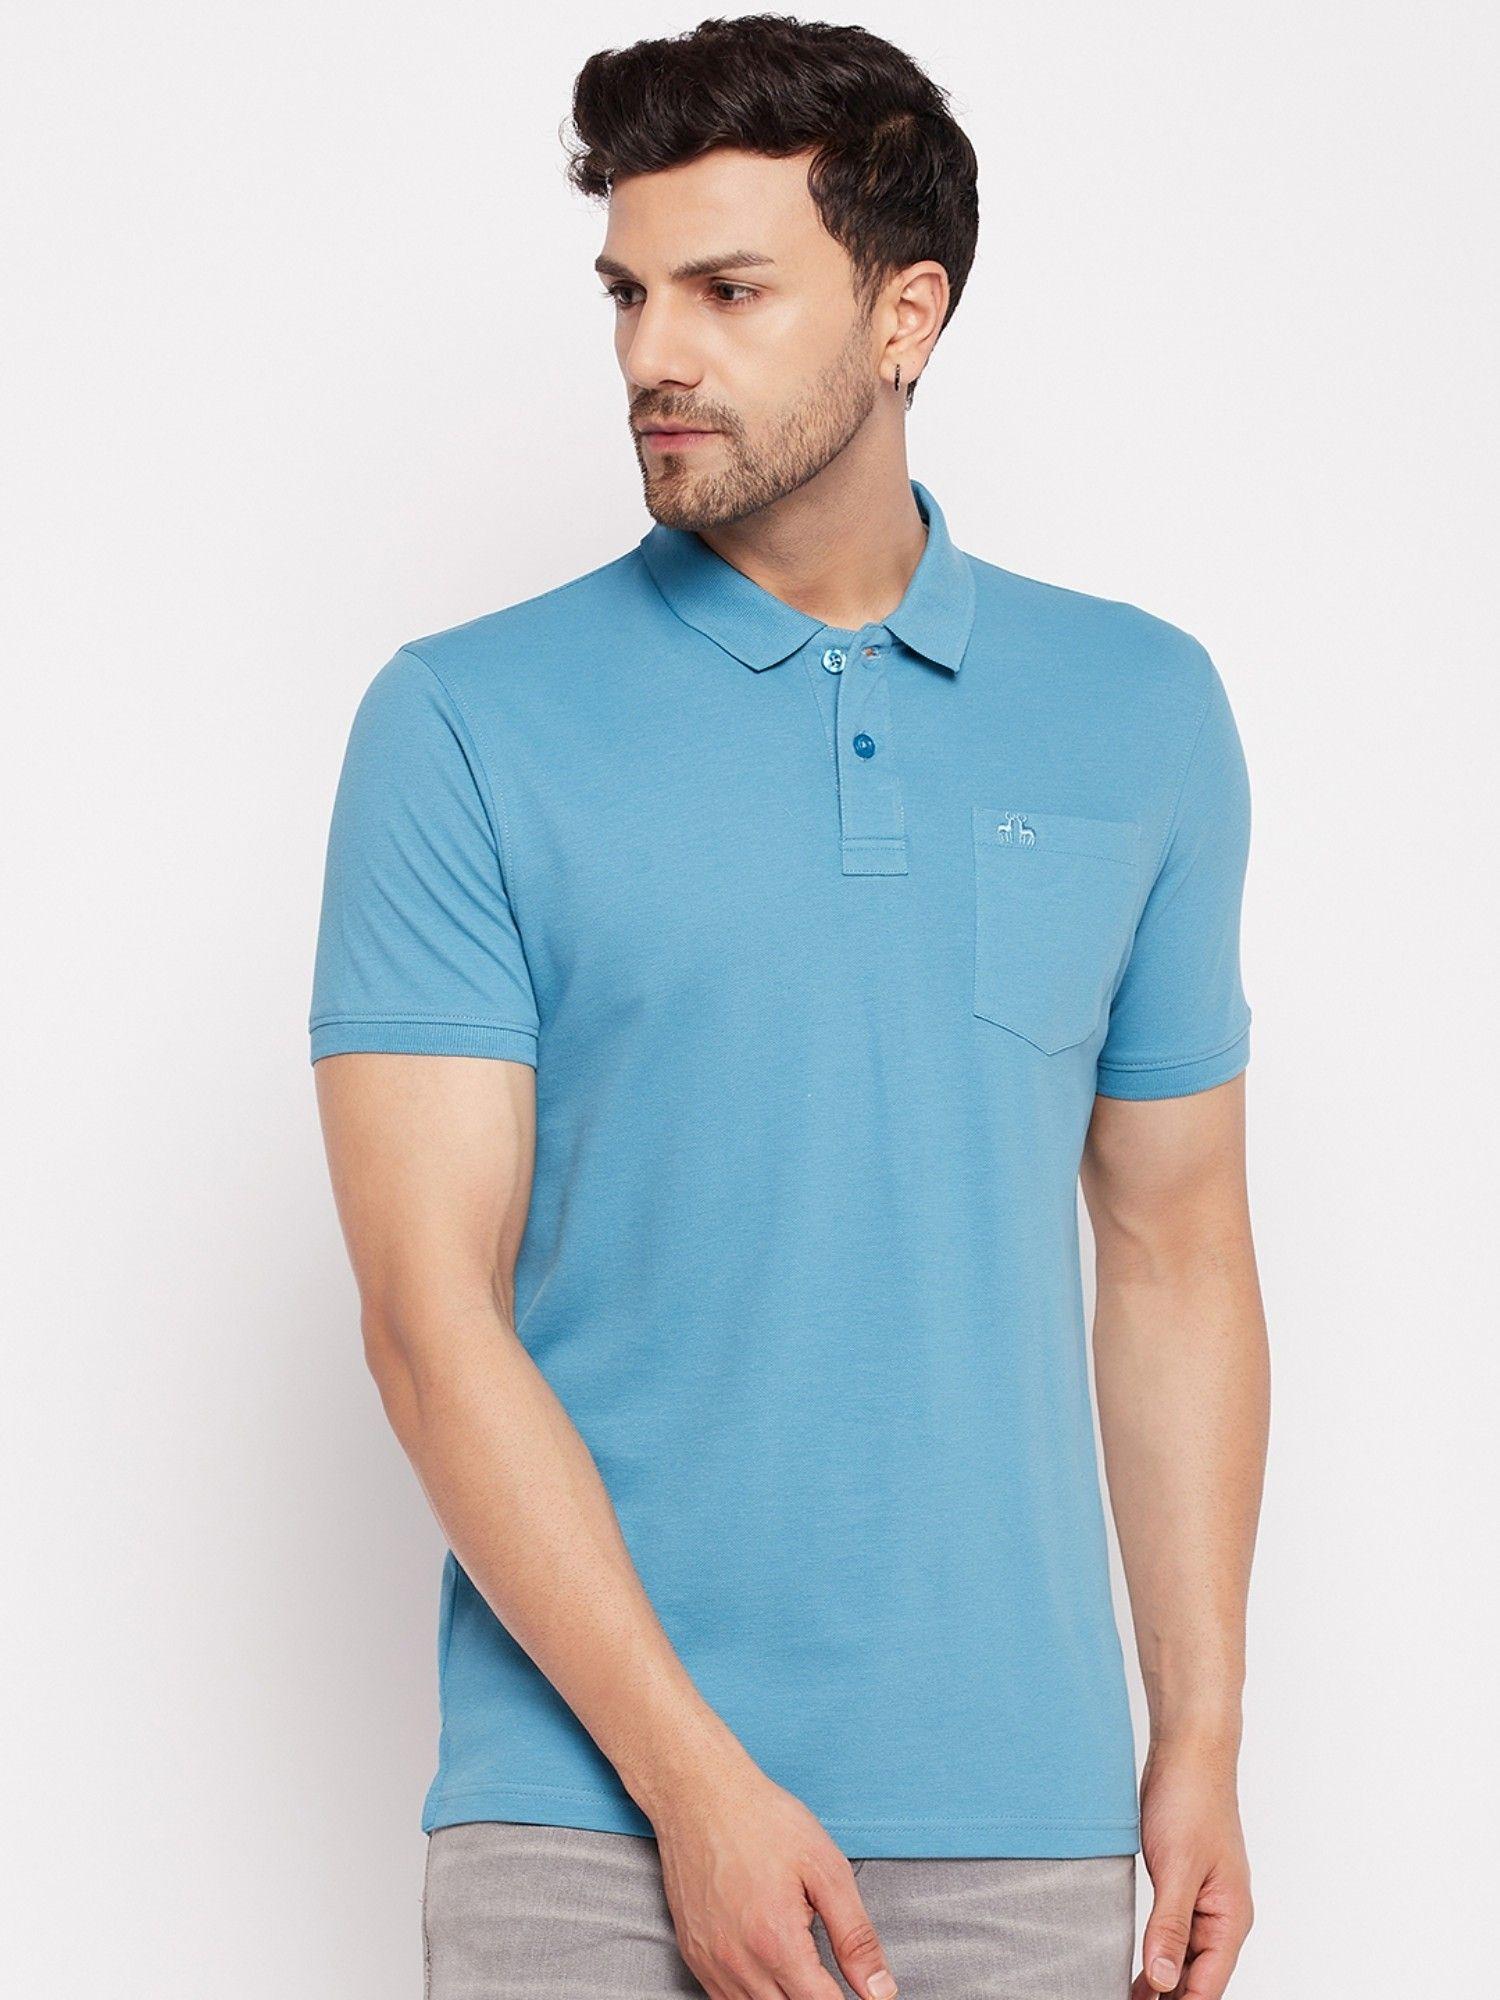 mens-cotton-lycra-blue-polo-neck-t-shirt